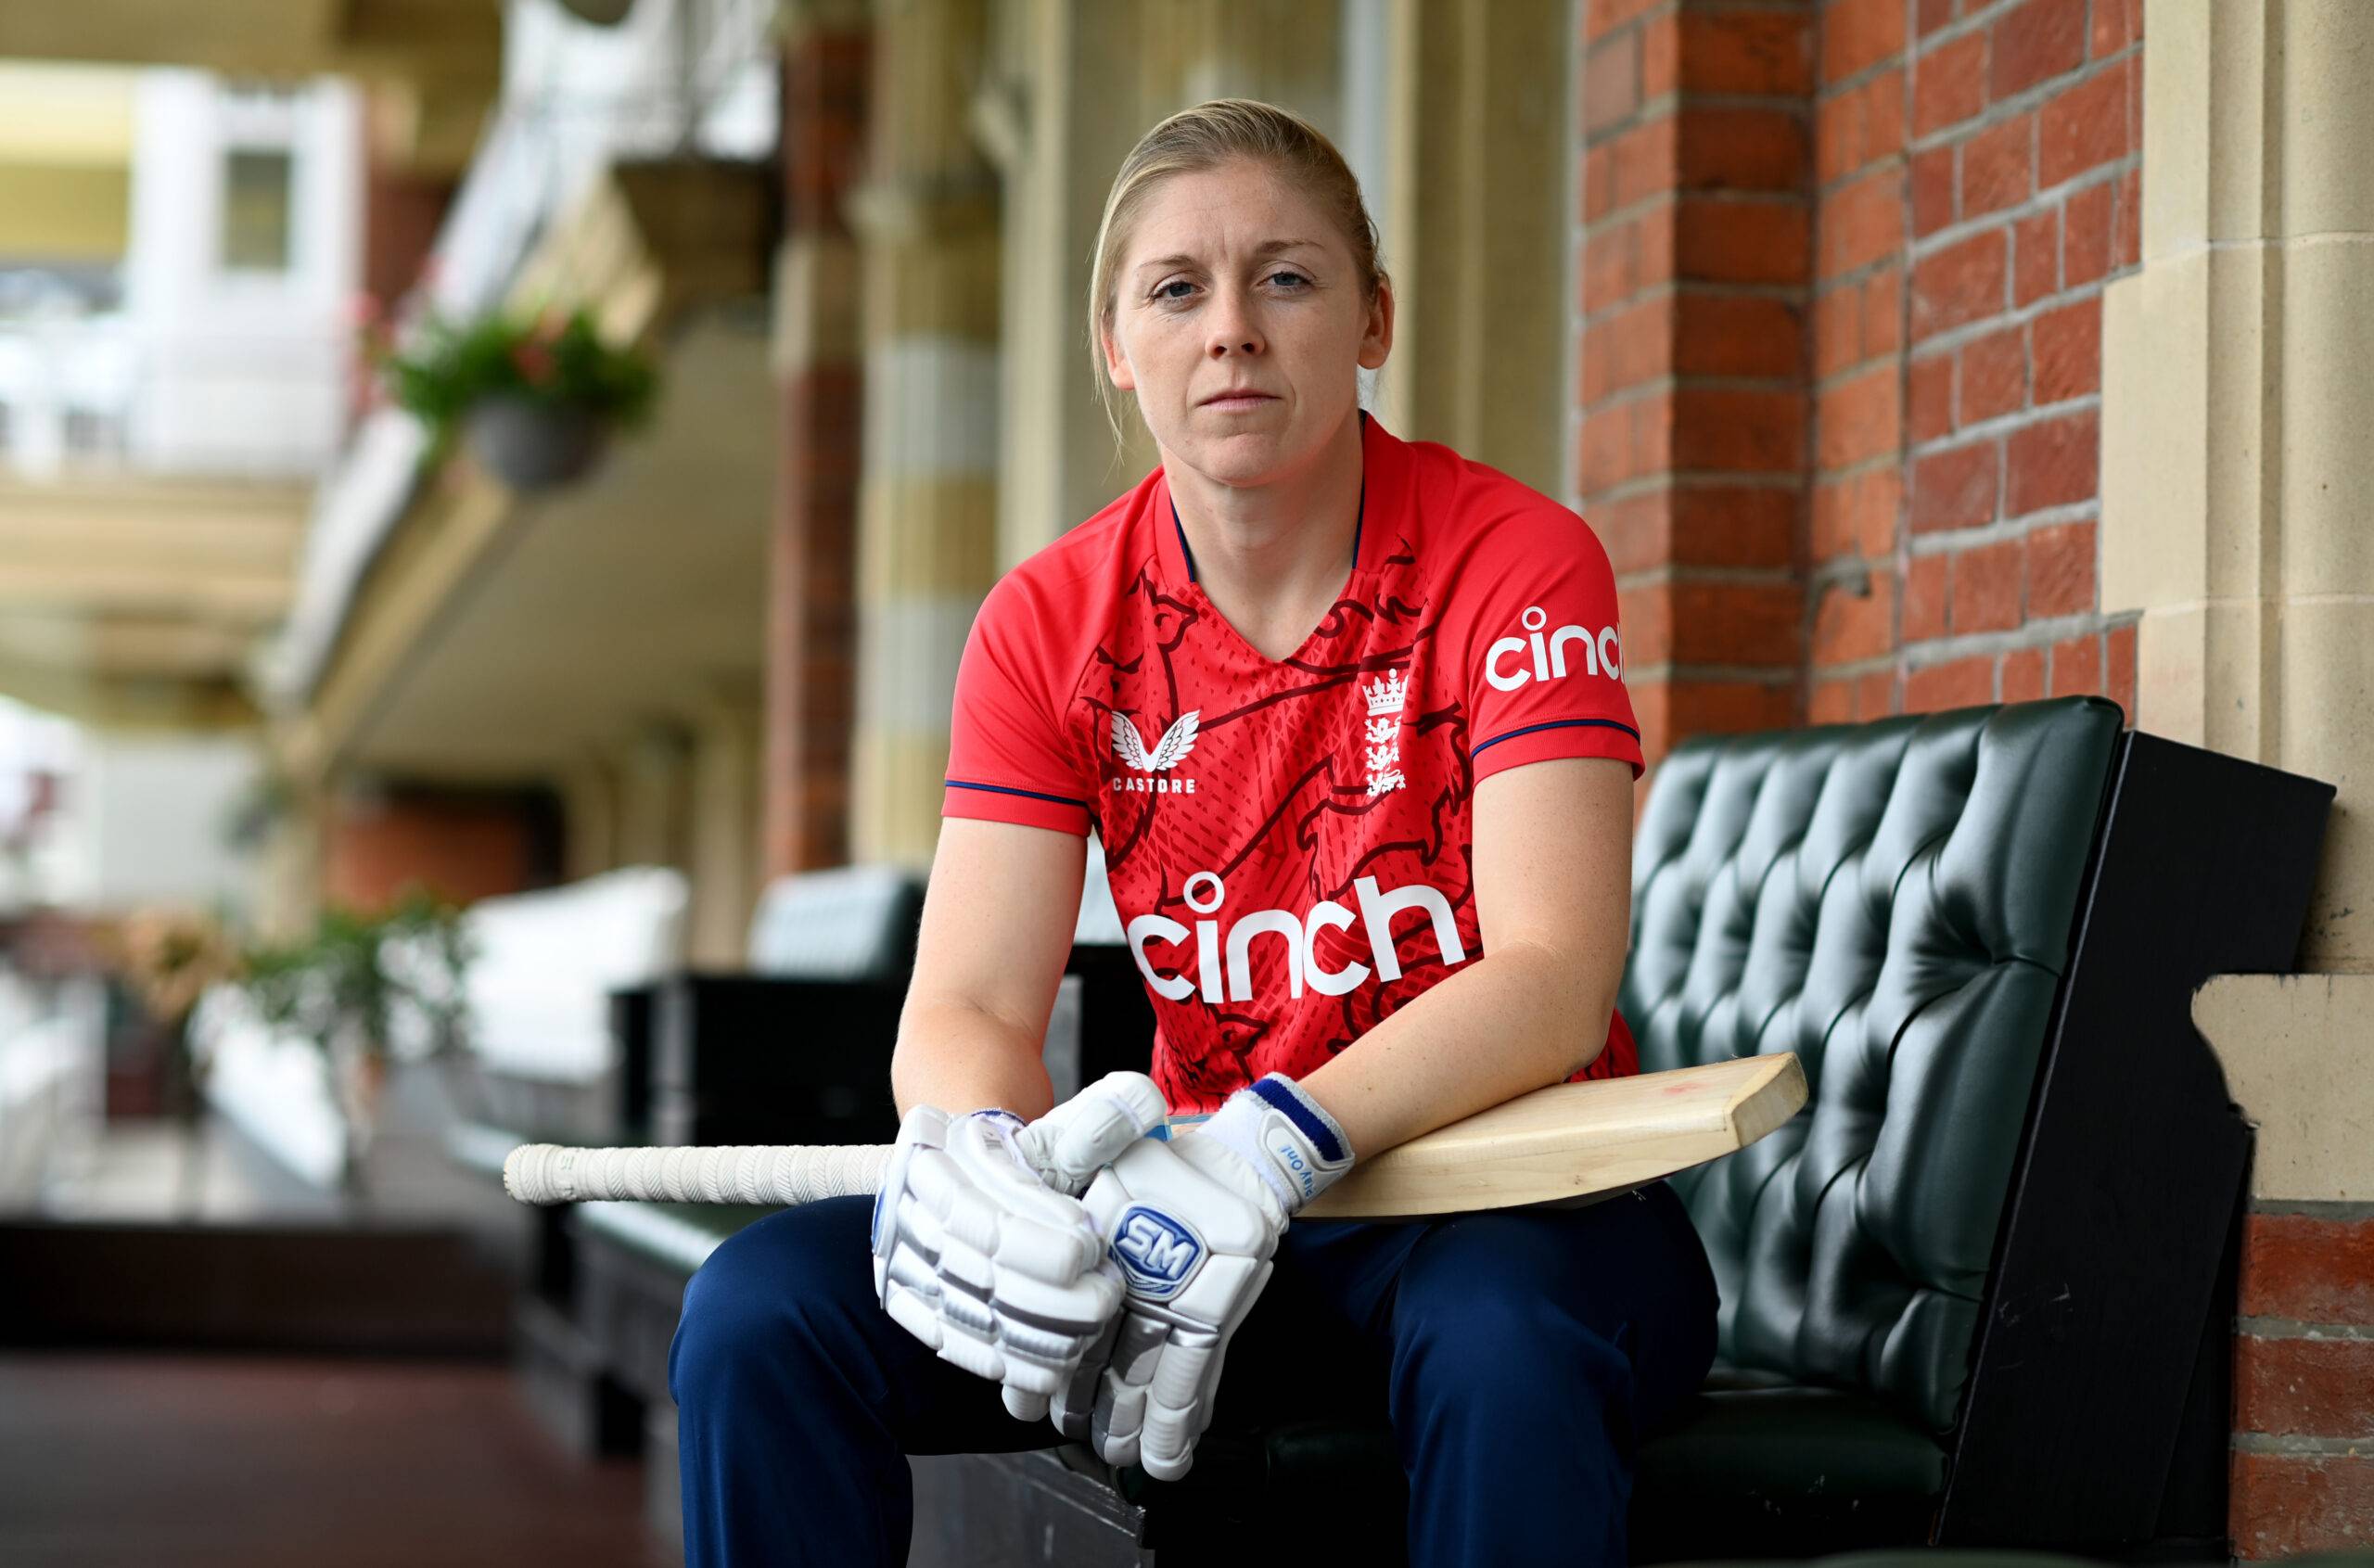 Cricket captain Heather Knight